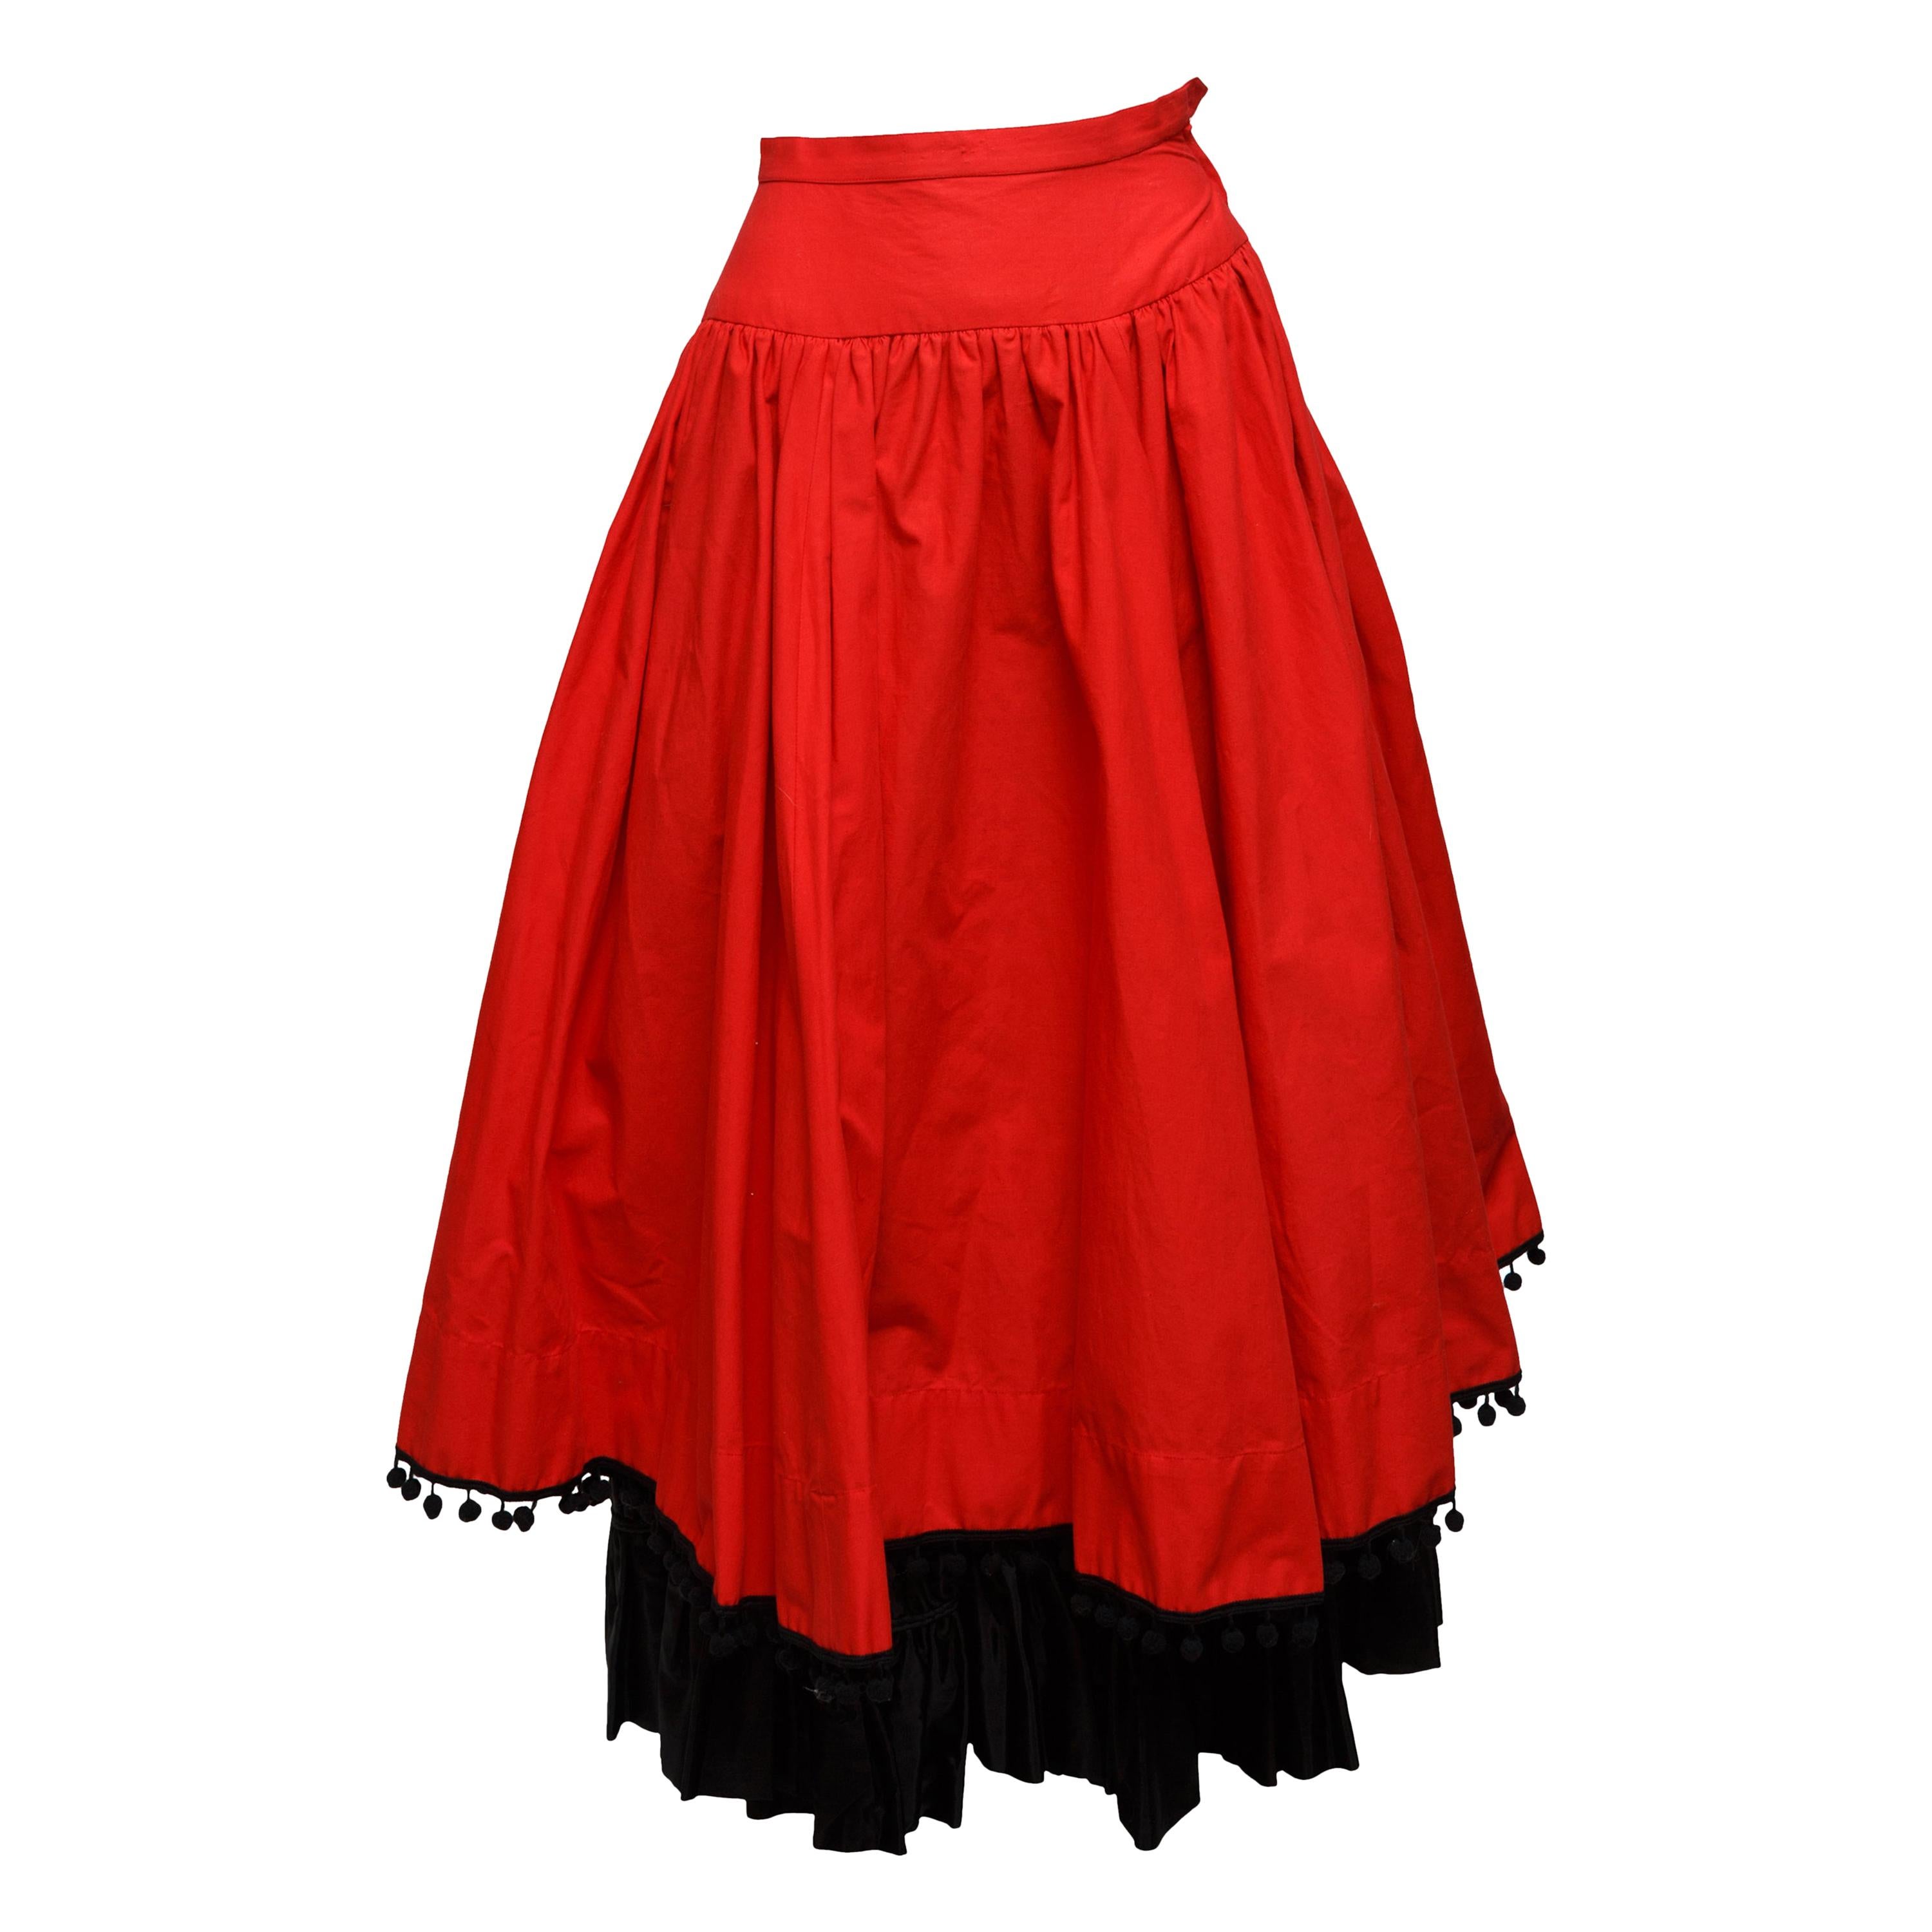 Yves Saint Laurent Red & Black 1977 Collection Skirt